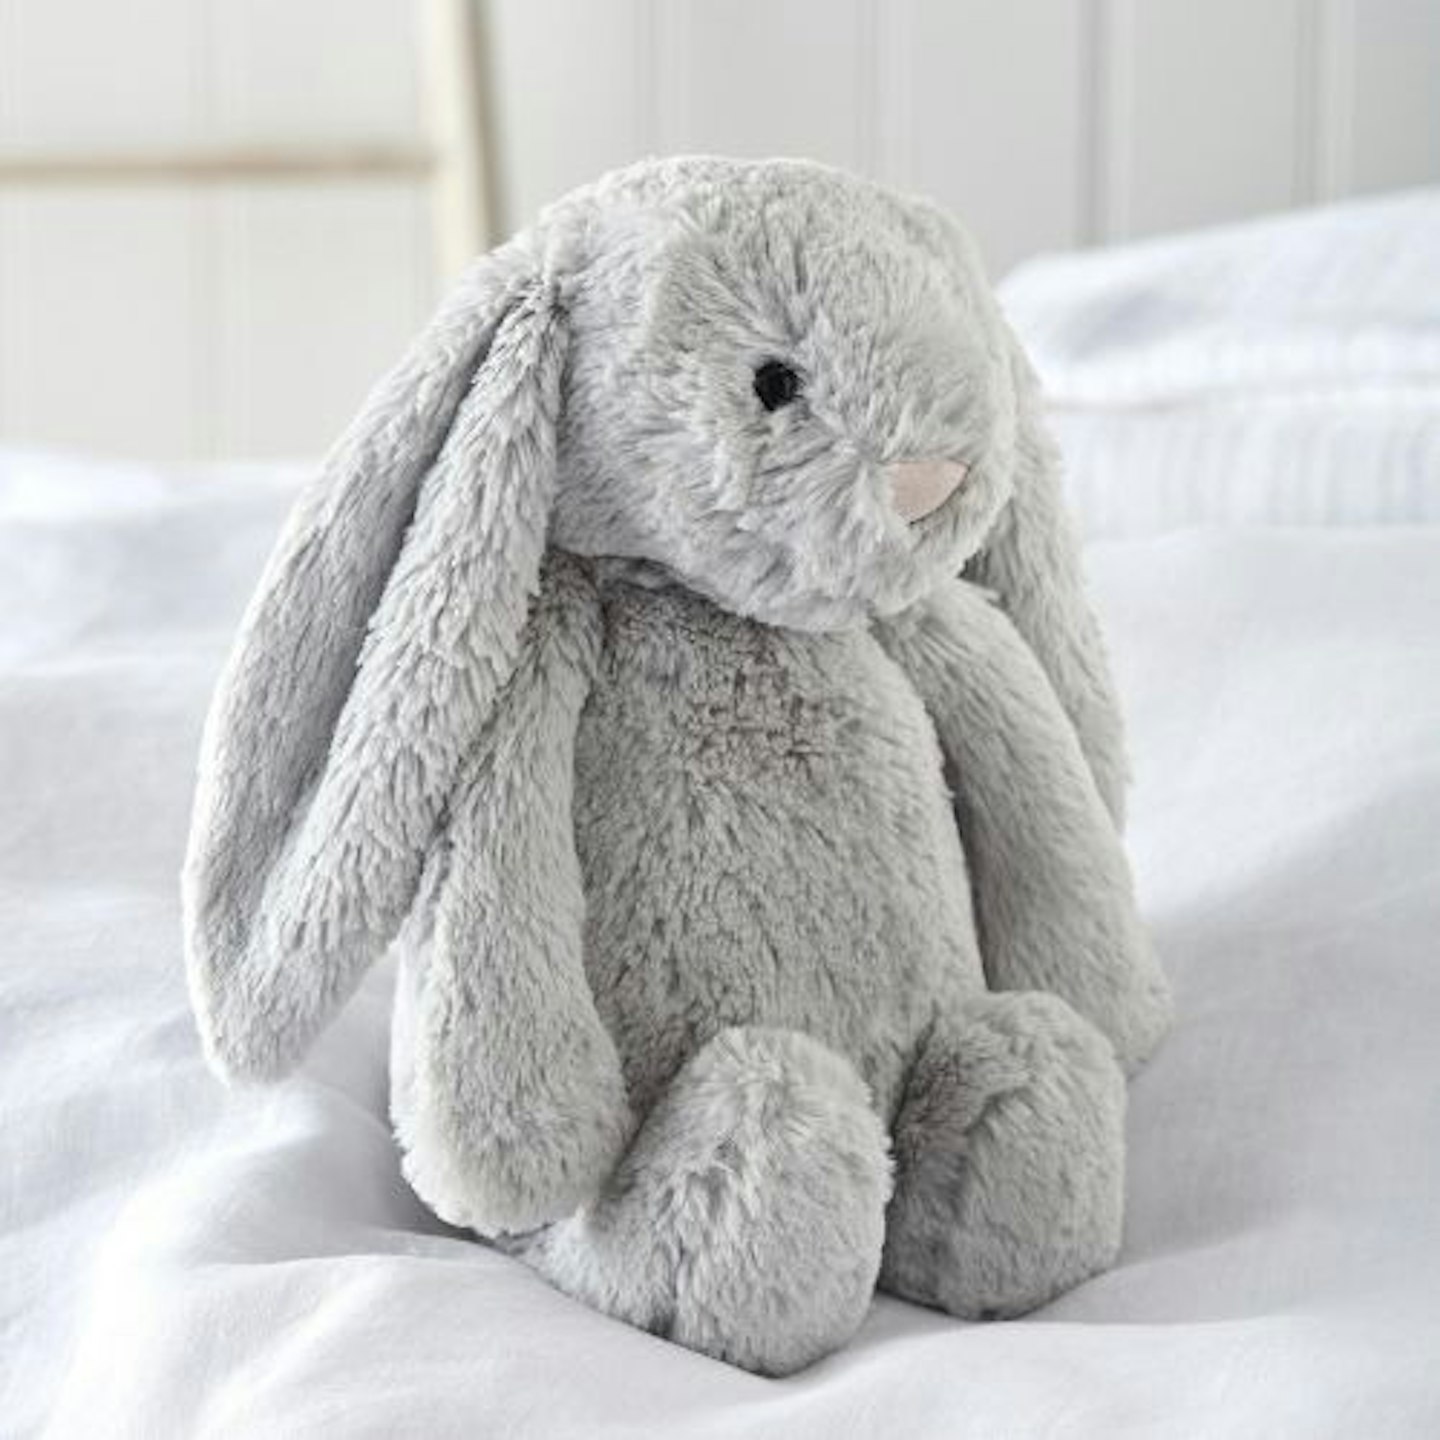 Best newborn gifts Jellycat Bashful Bunny Toy – Medium